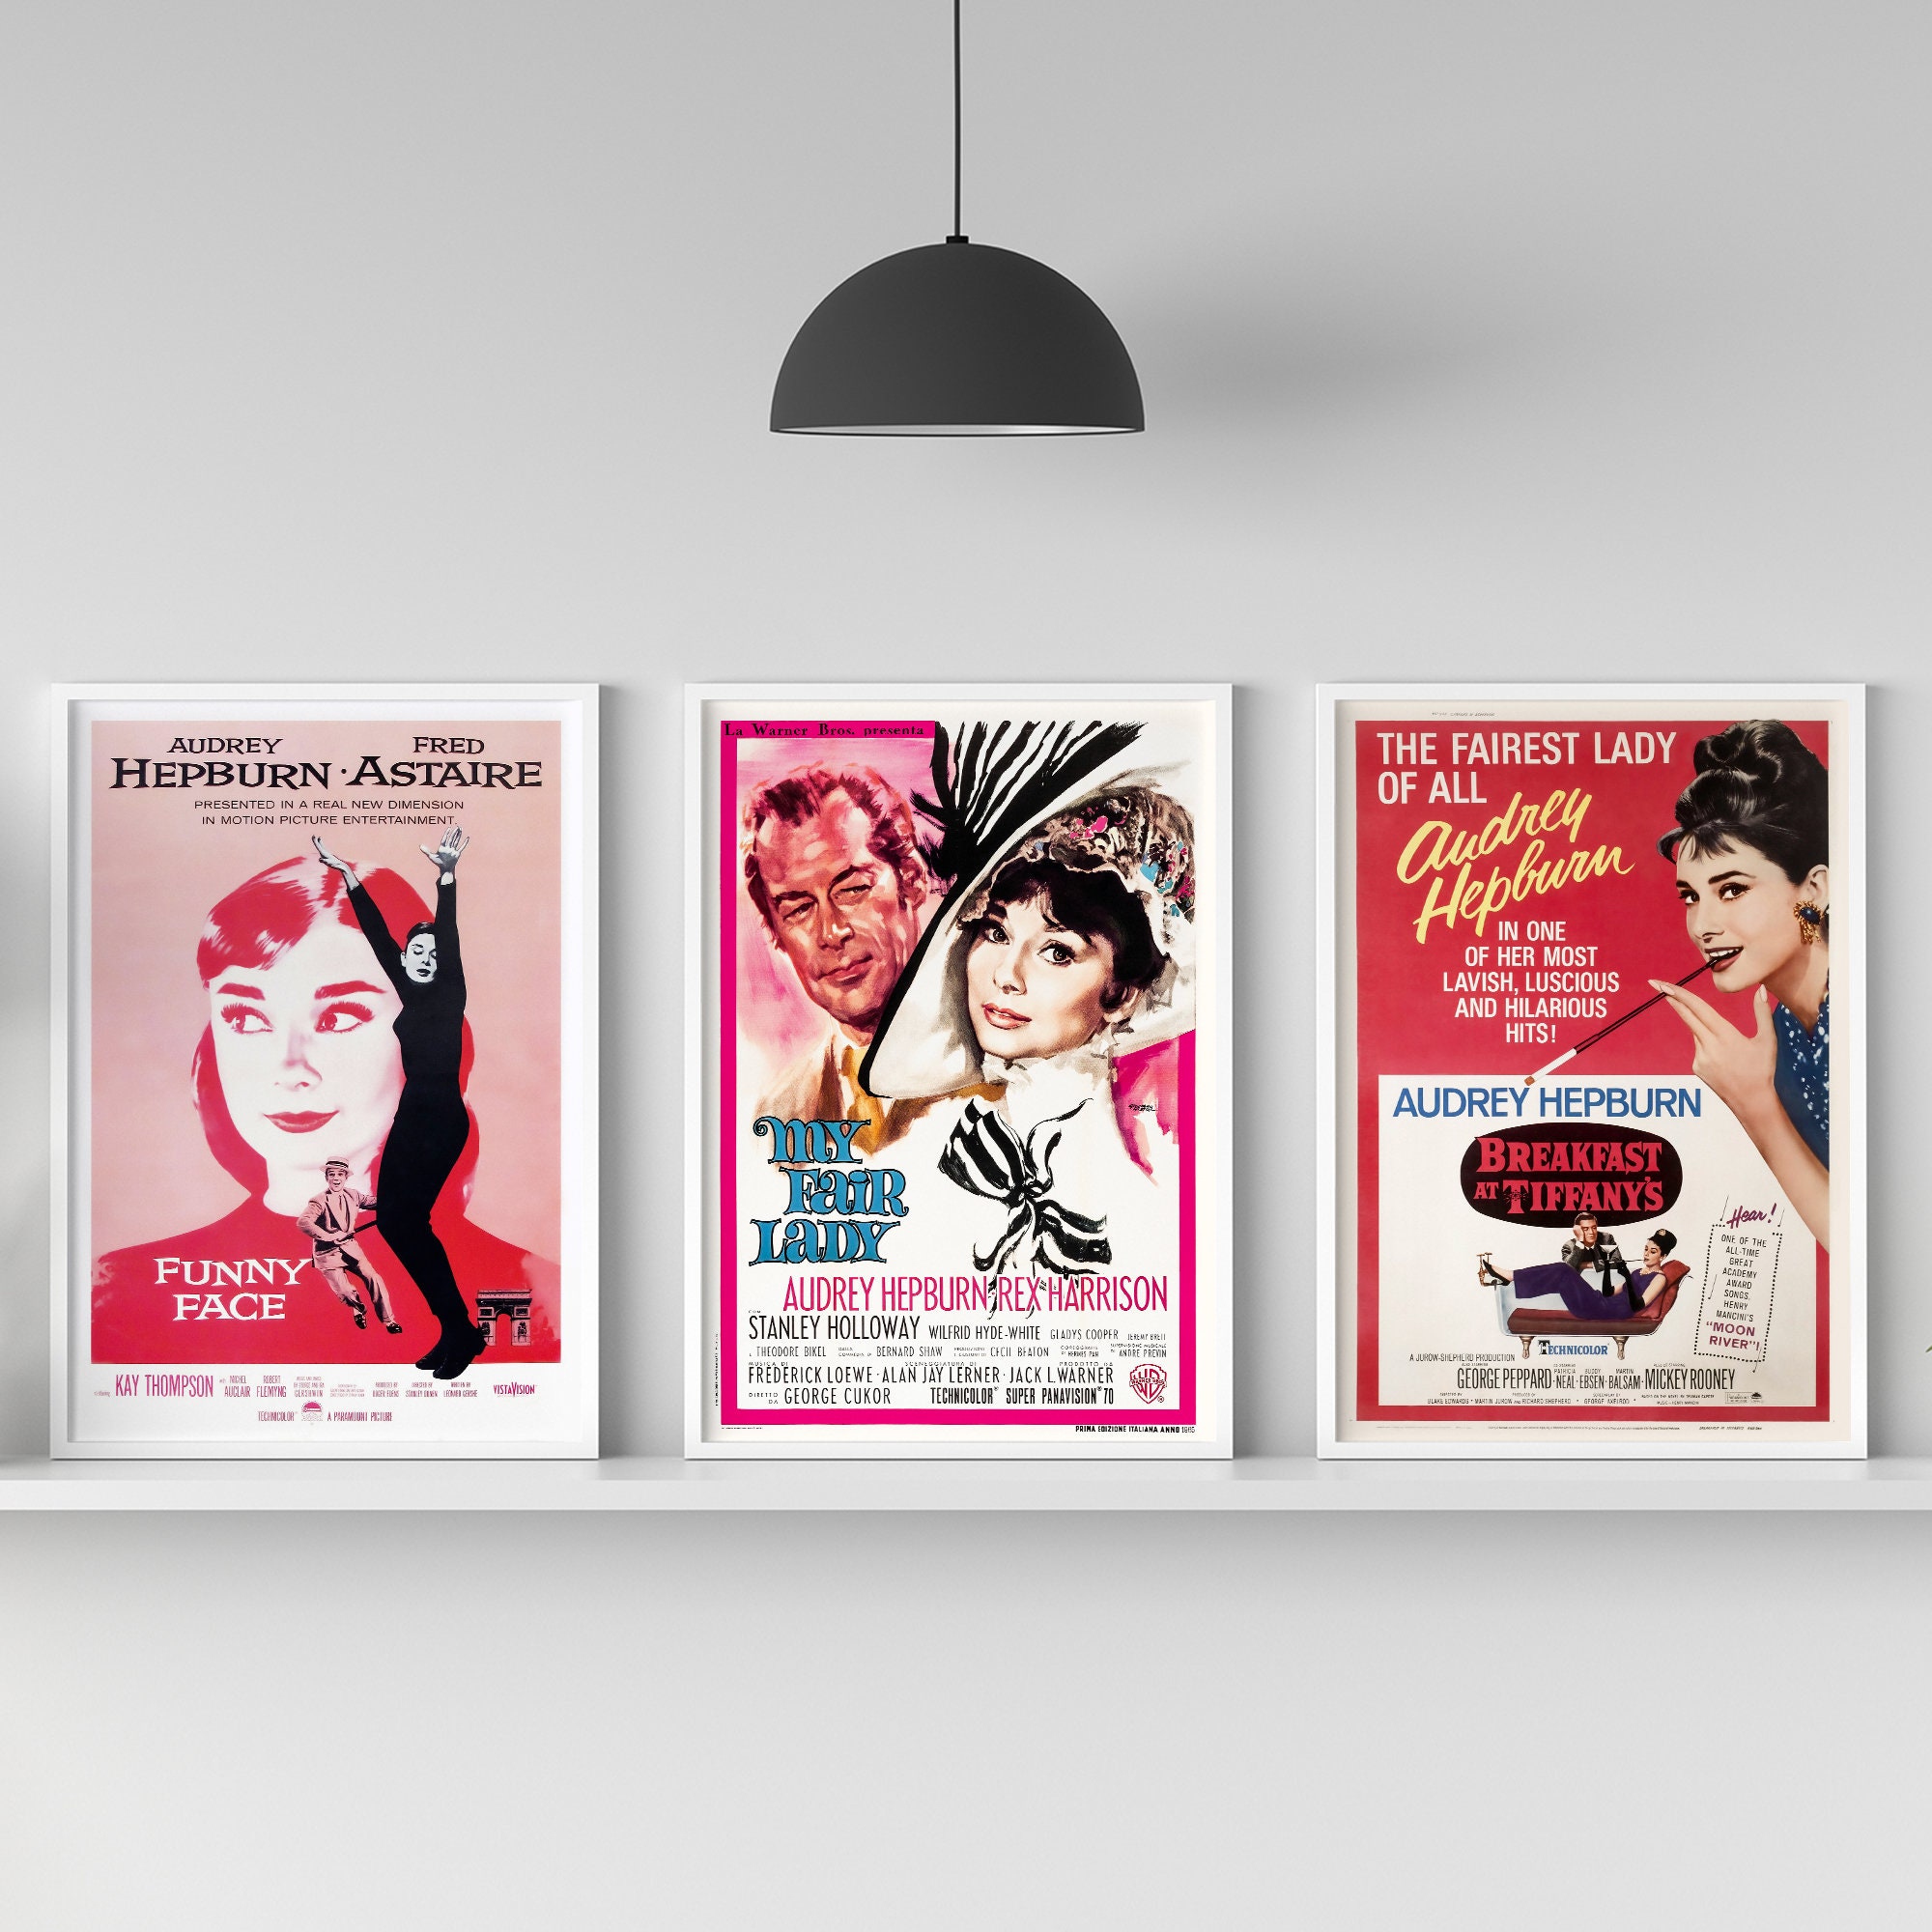 My Fair Lady Movie Poster Audrey Hepburn – Poster Merchant